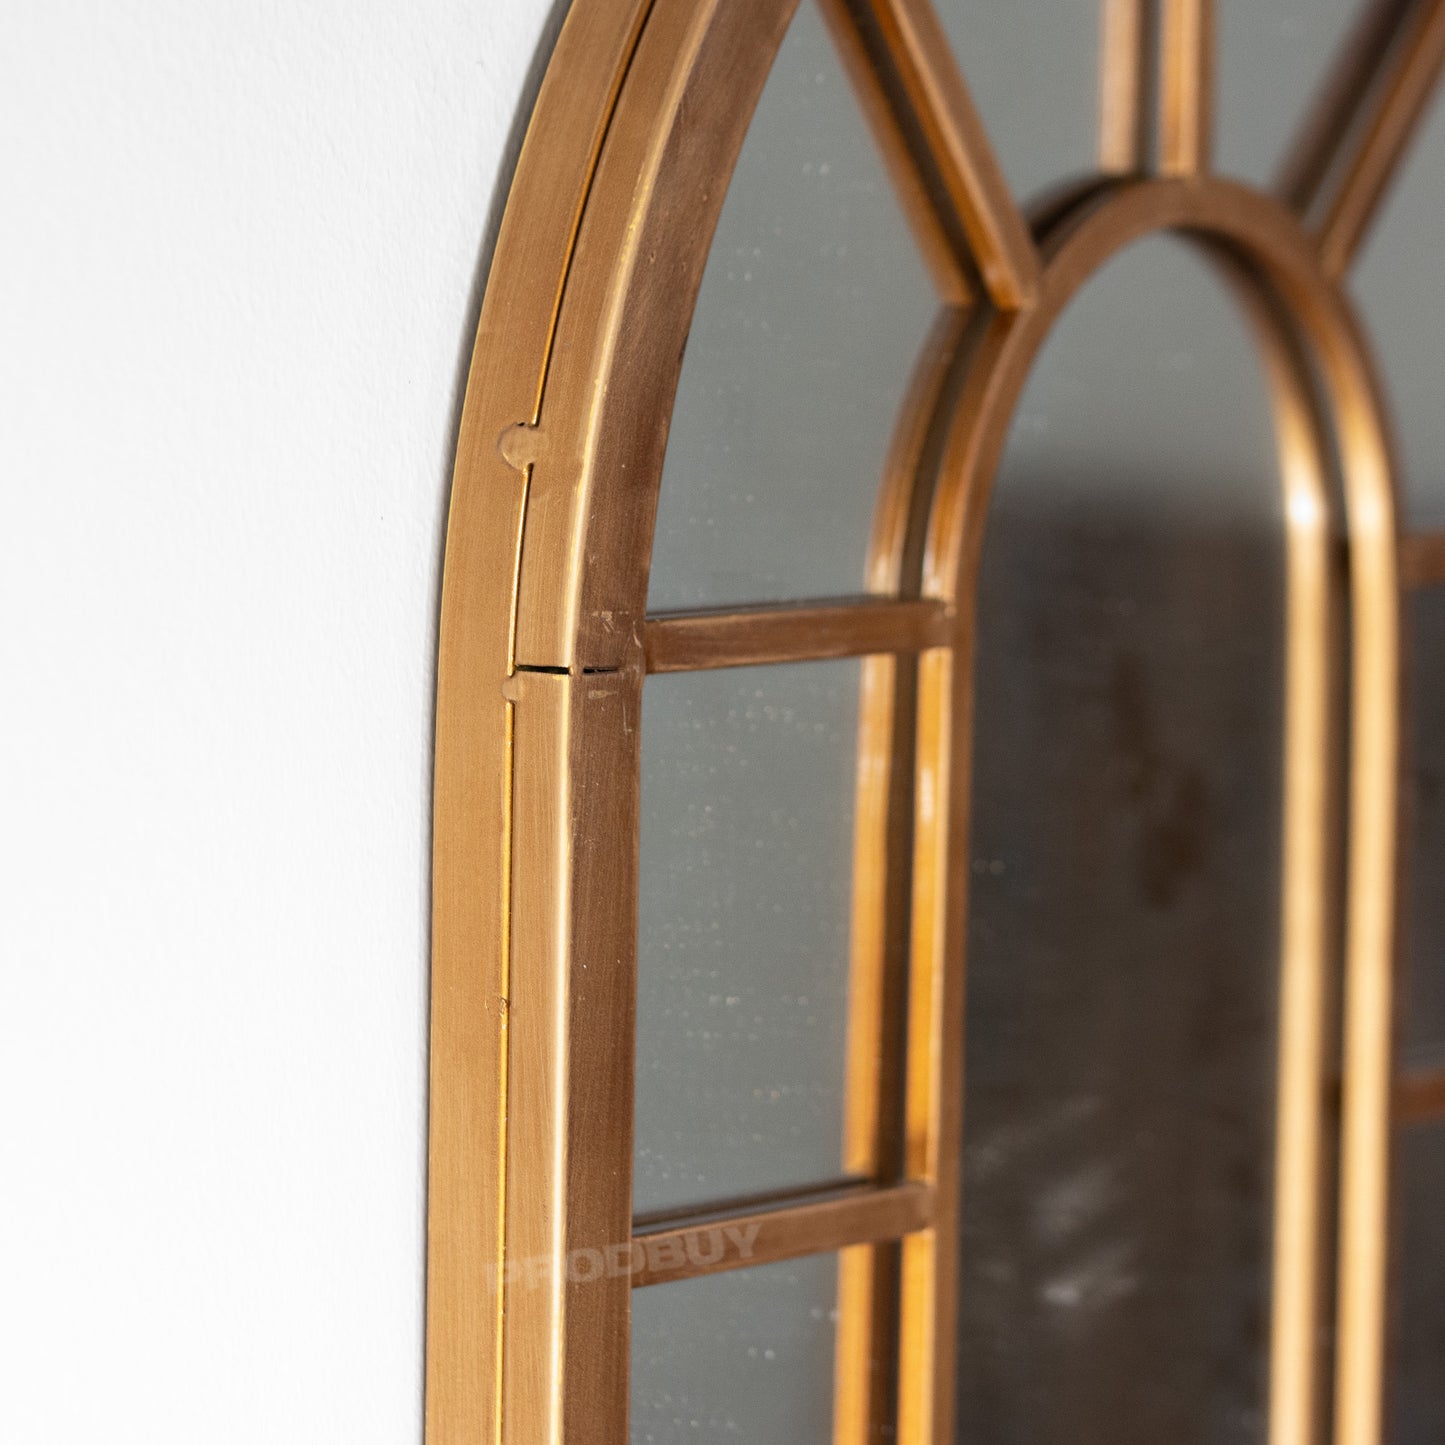 Copper Colour Metal 45cm Arch Window Wall Mirror